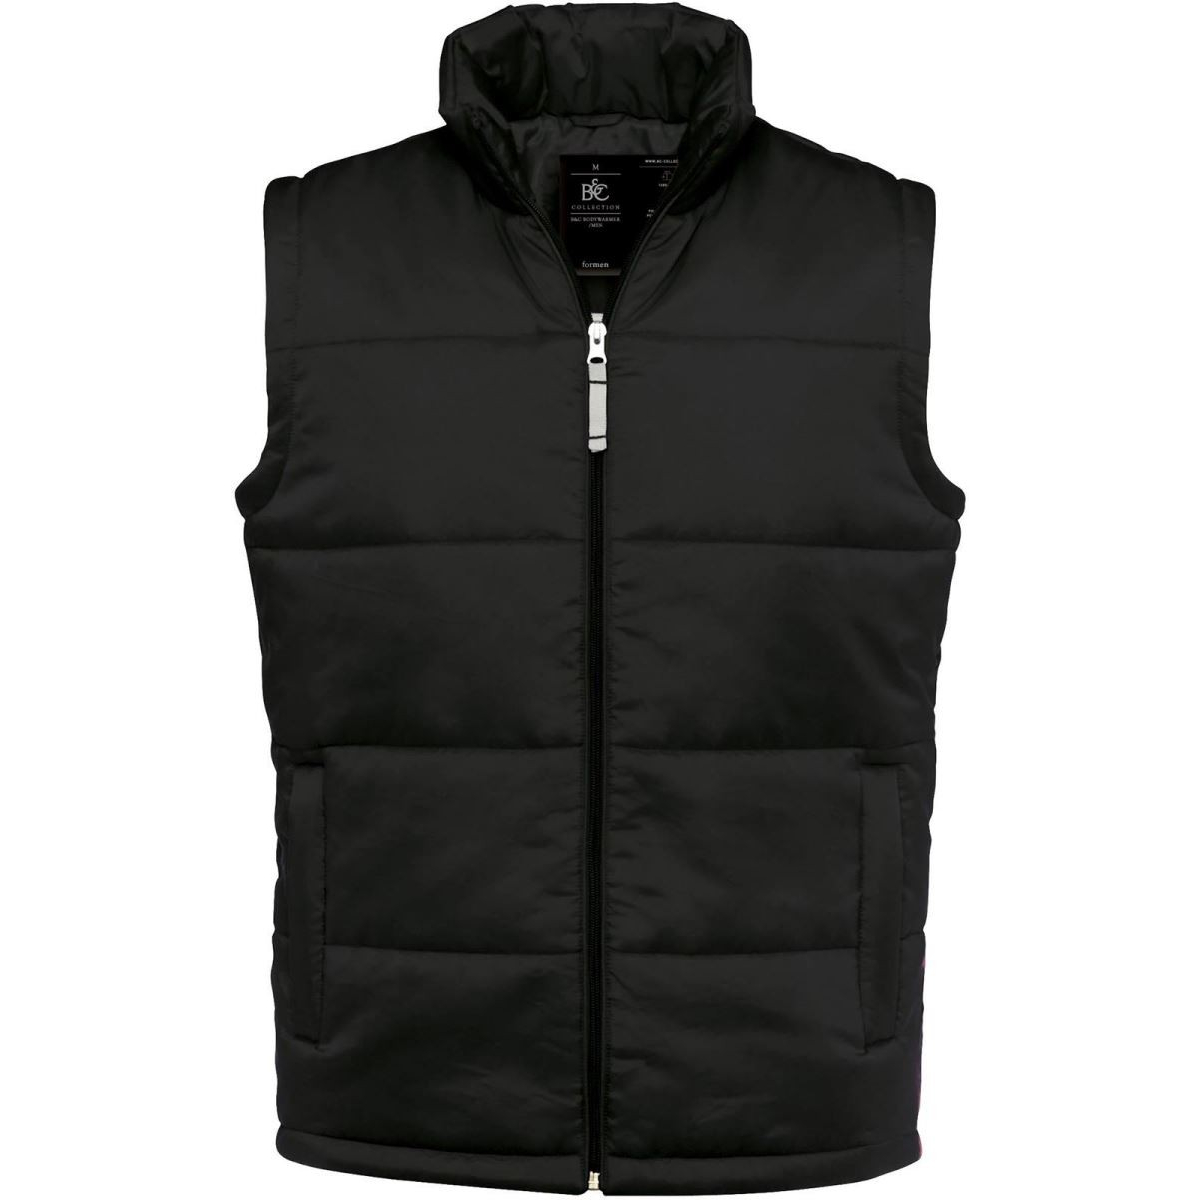 Pánská vesta B&C Bodywarmer - černá, L